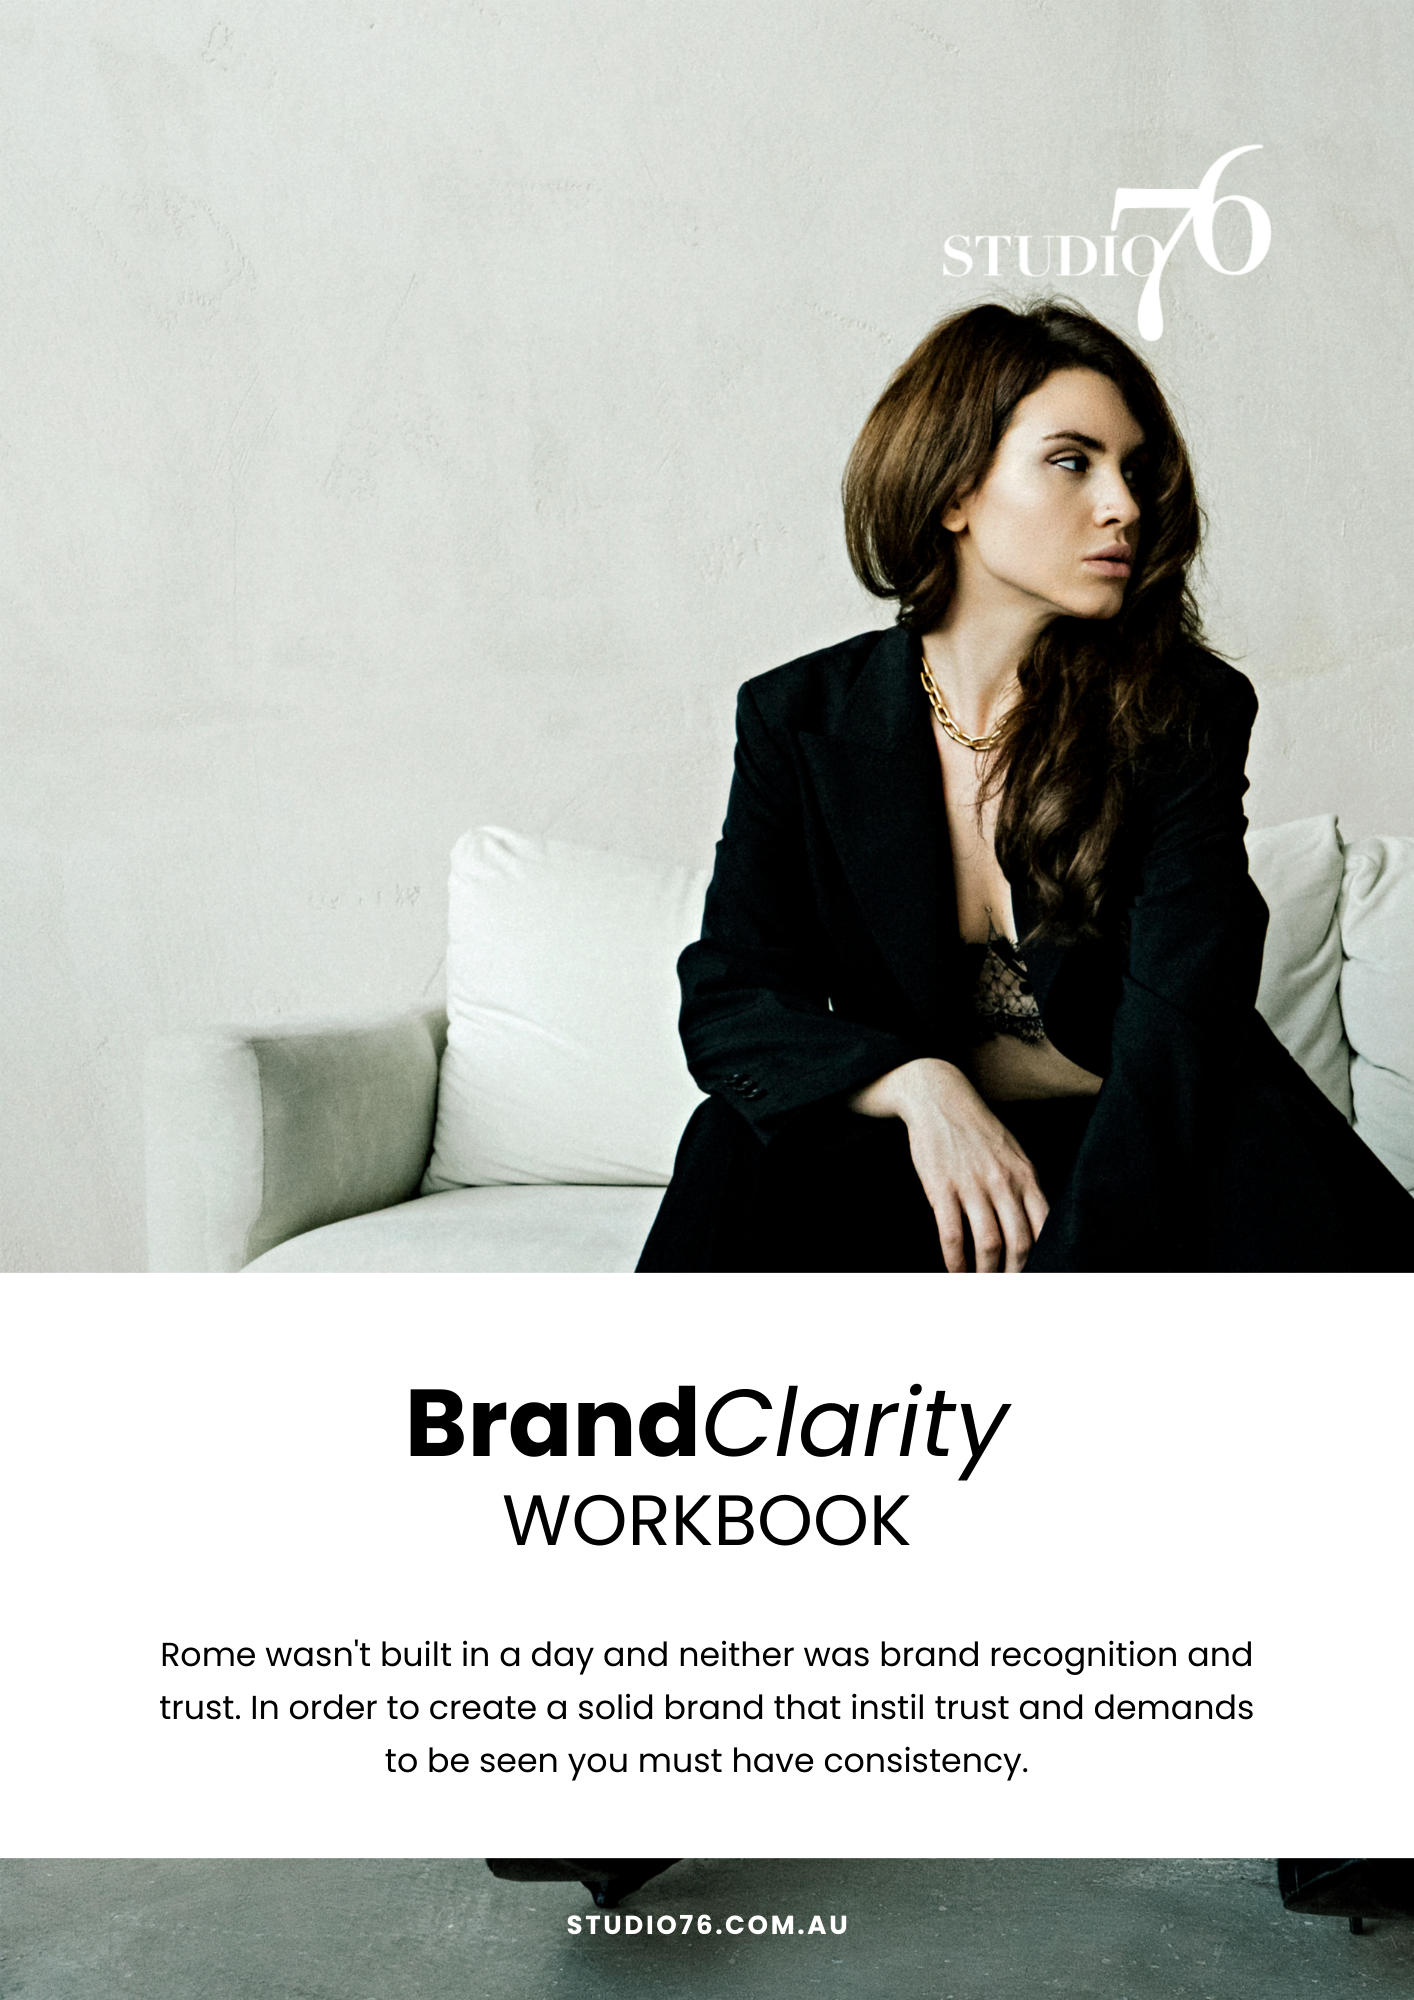 The Brand Clarity Workbook